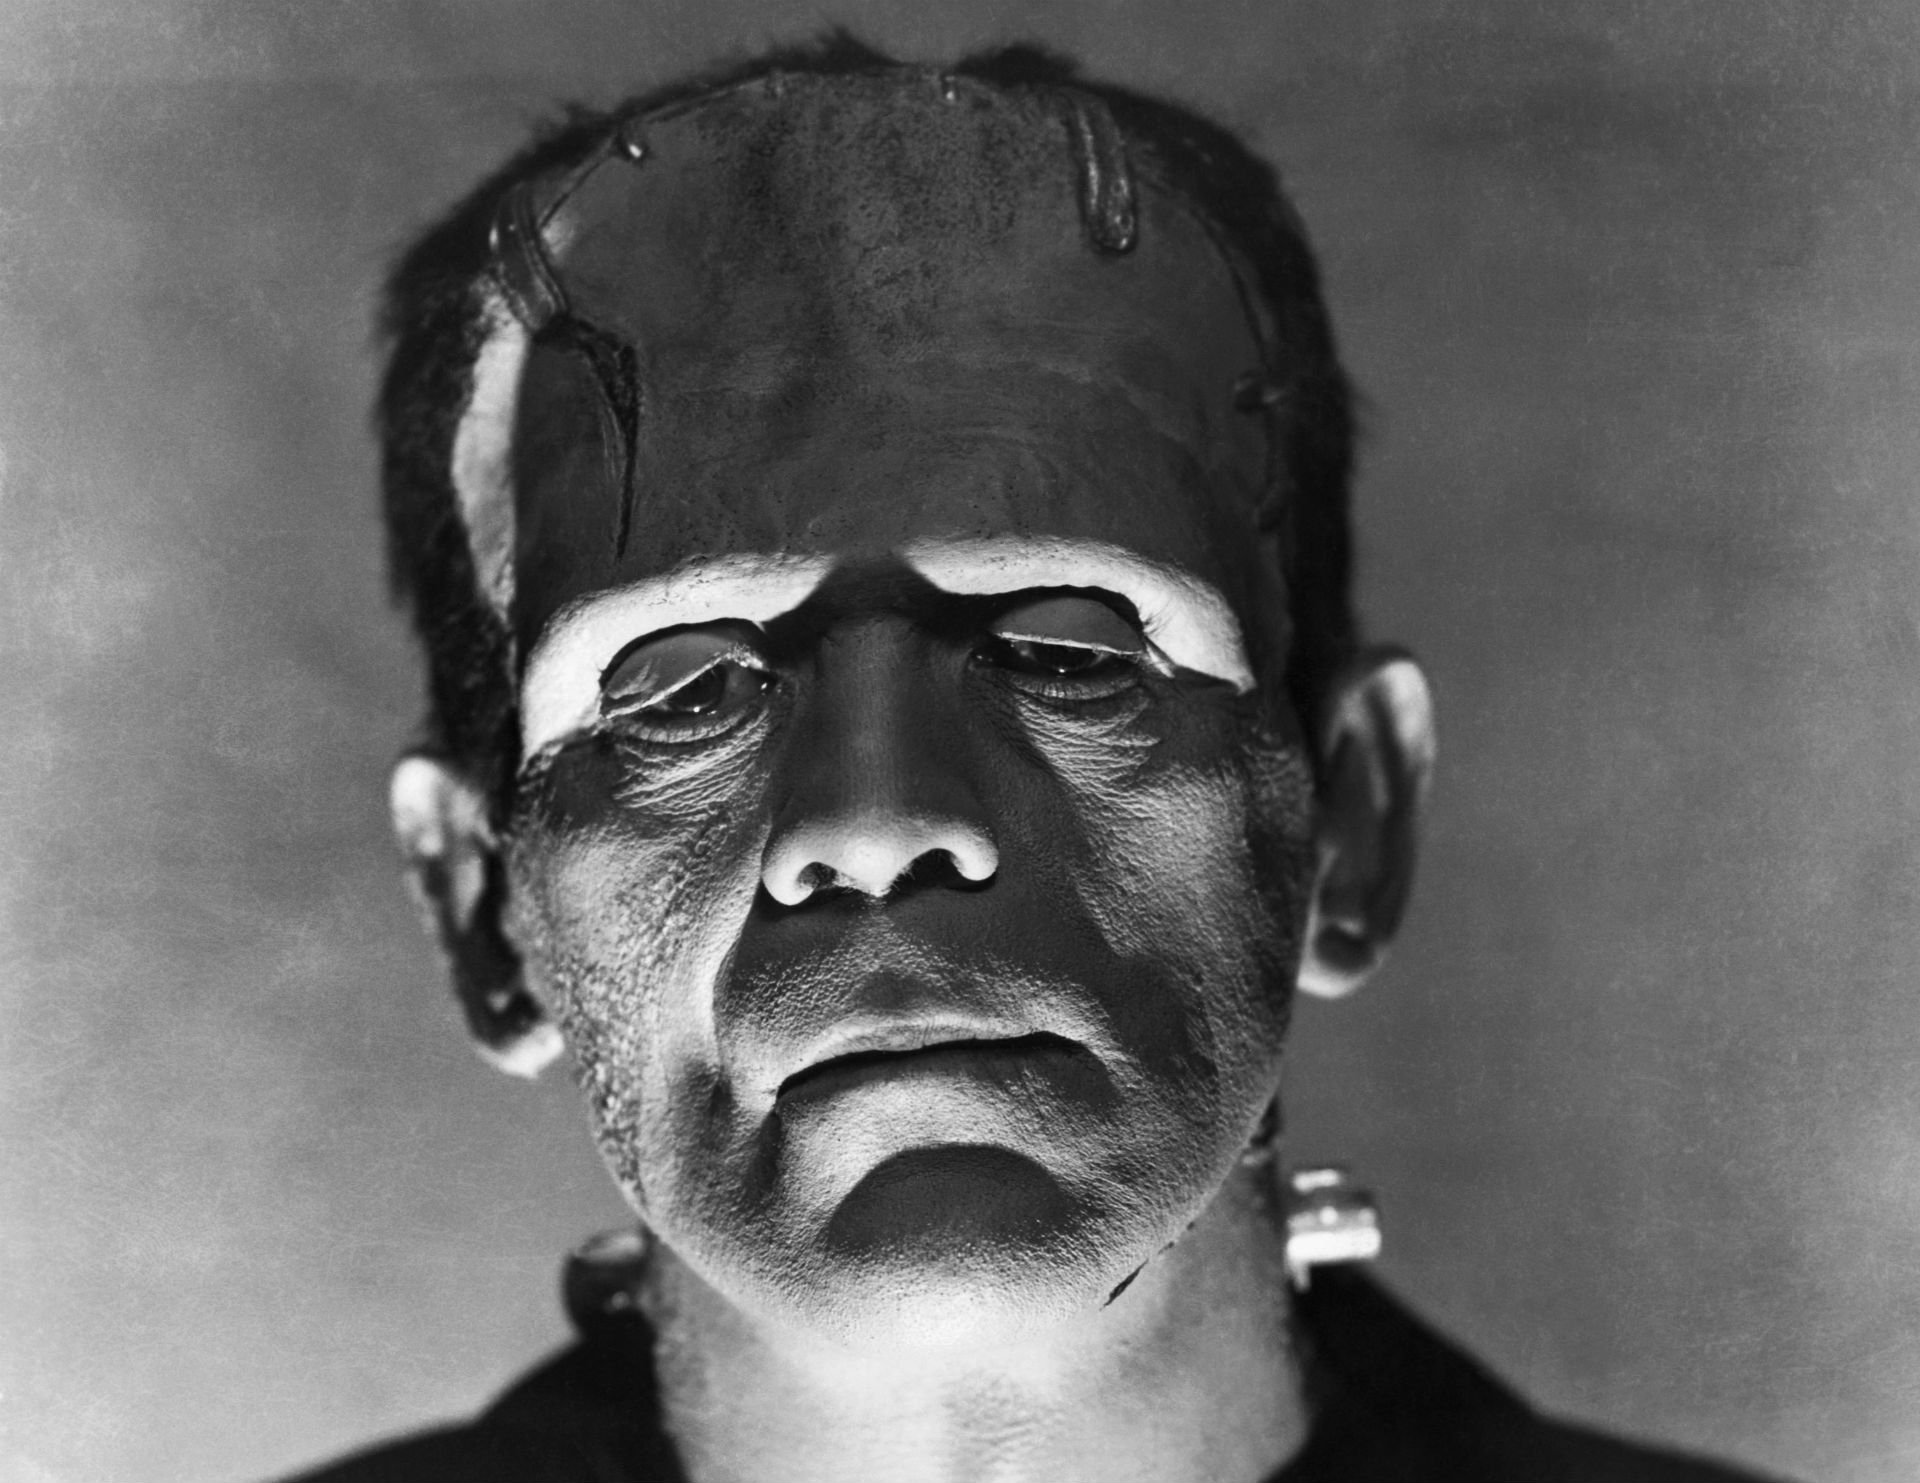 Bride of Frankenstein Full HD Wallpaper and Background Image